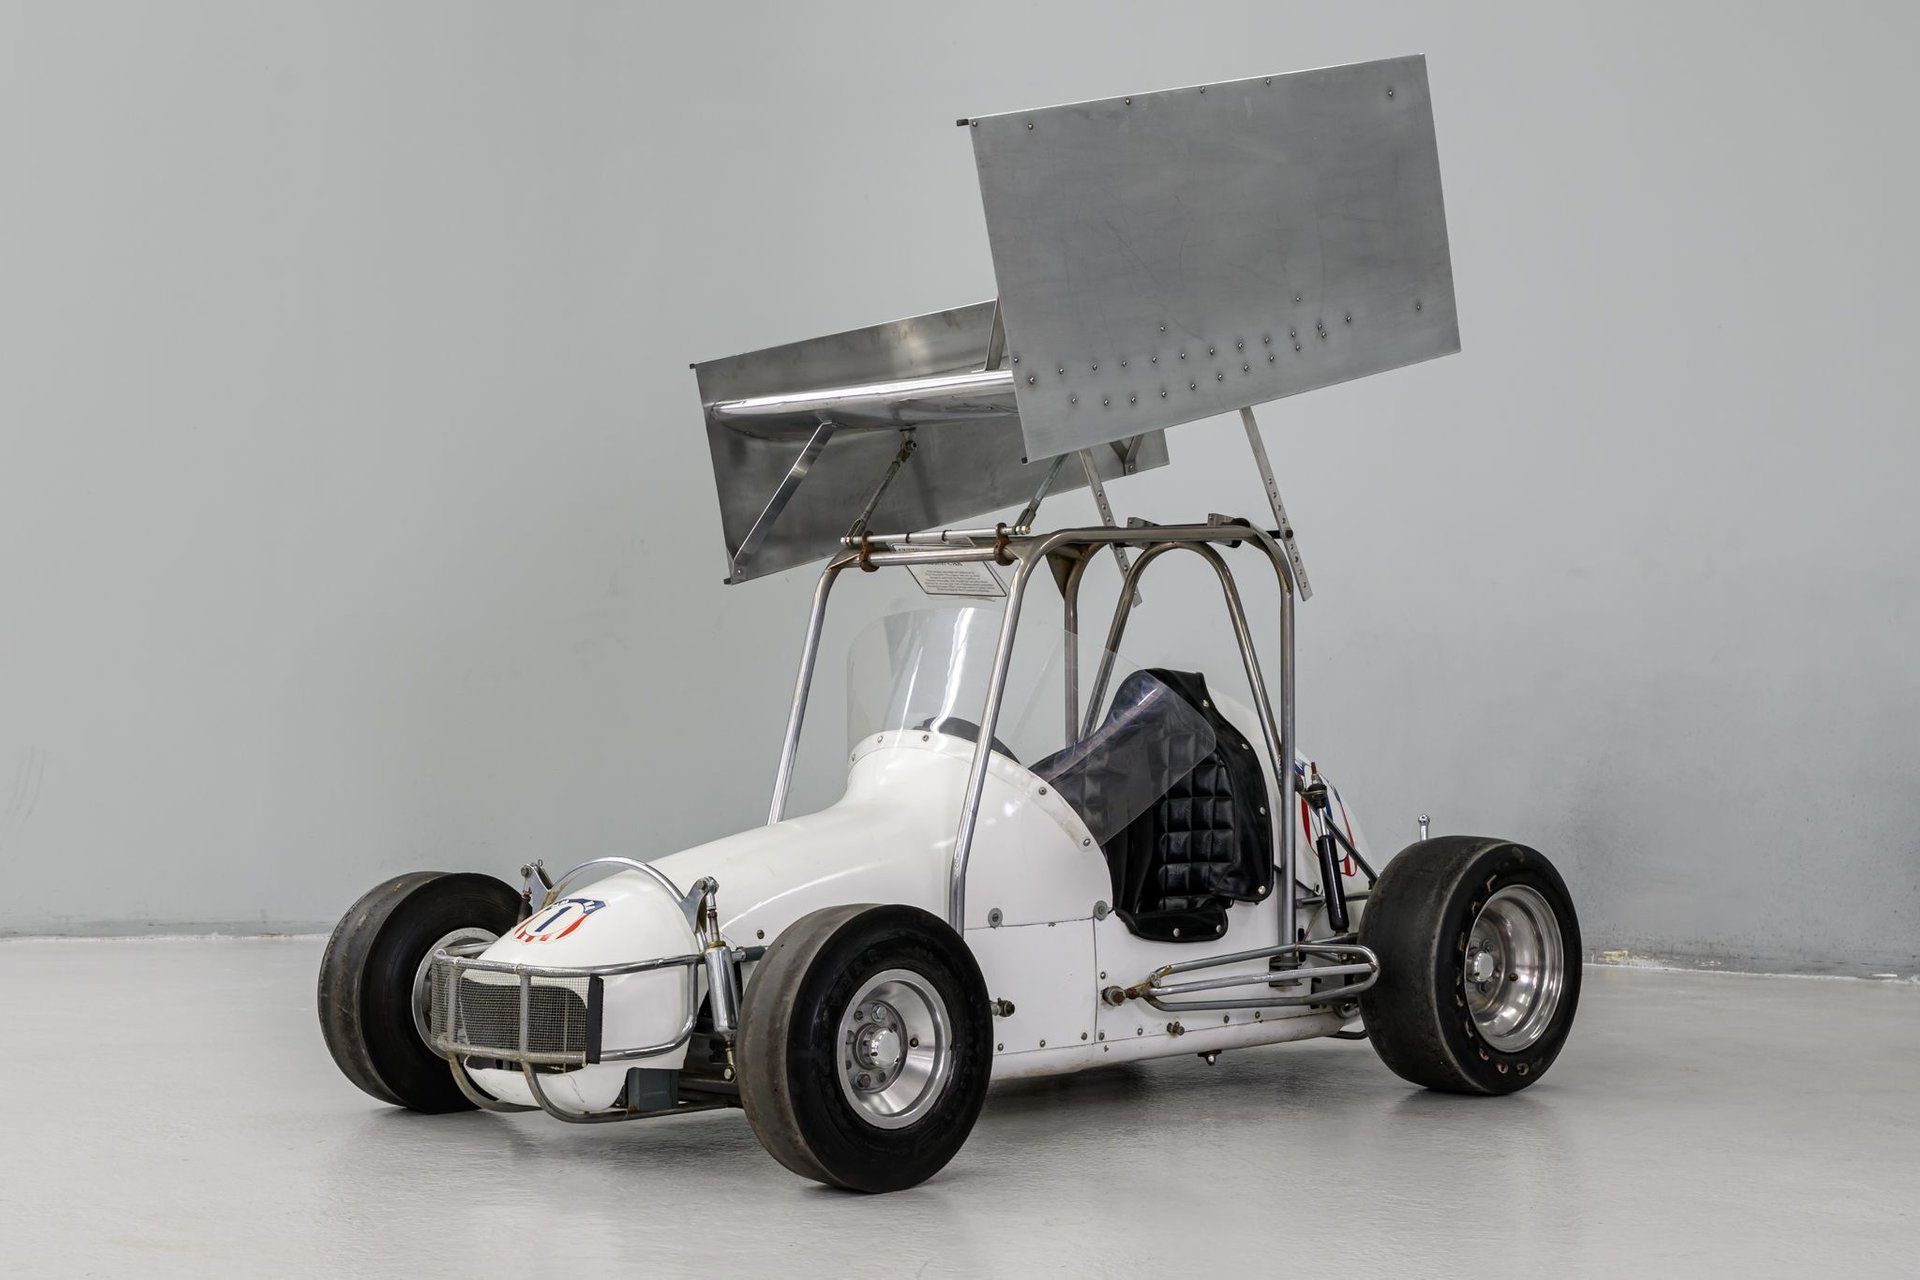 1960 cushman powered micro midget race car